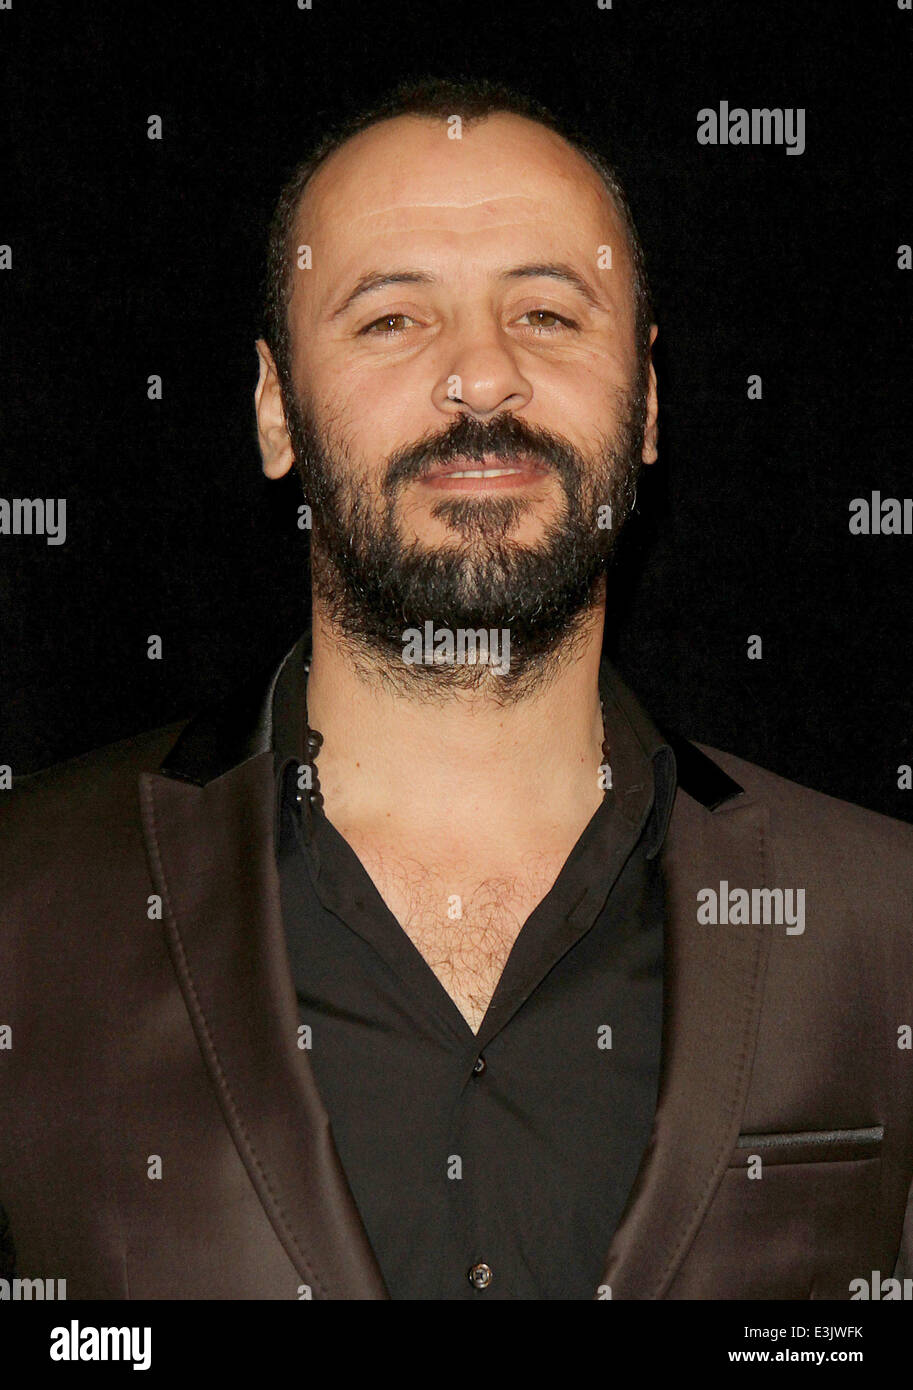 Premiere of 'Lone Survivor' held at the Ziegfeld Theater - Arrivals  Featuring: Ali Suliman Where: New York City, New York, United States When: 03 Dec 2013 Stock Photo